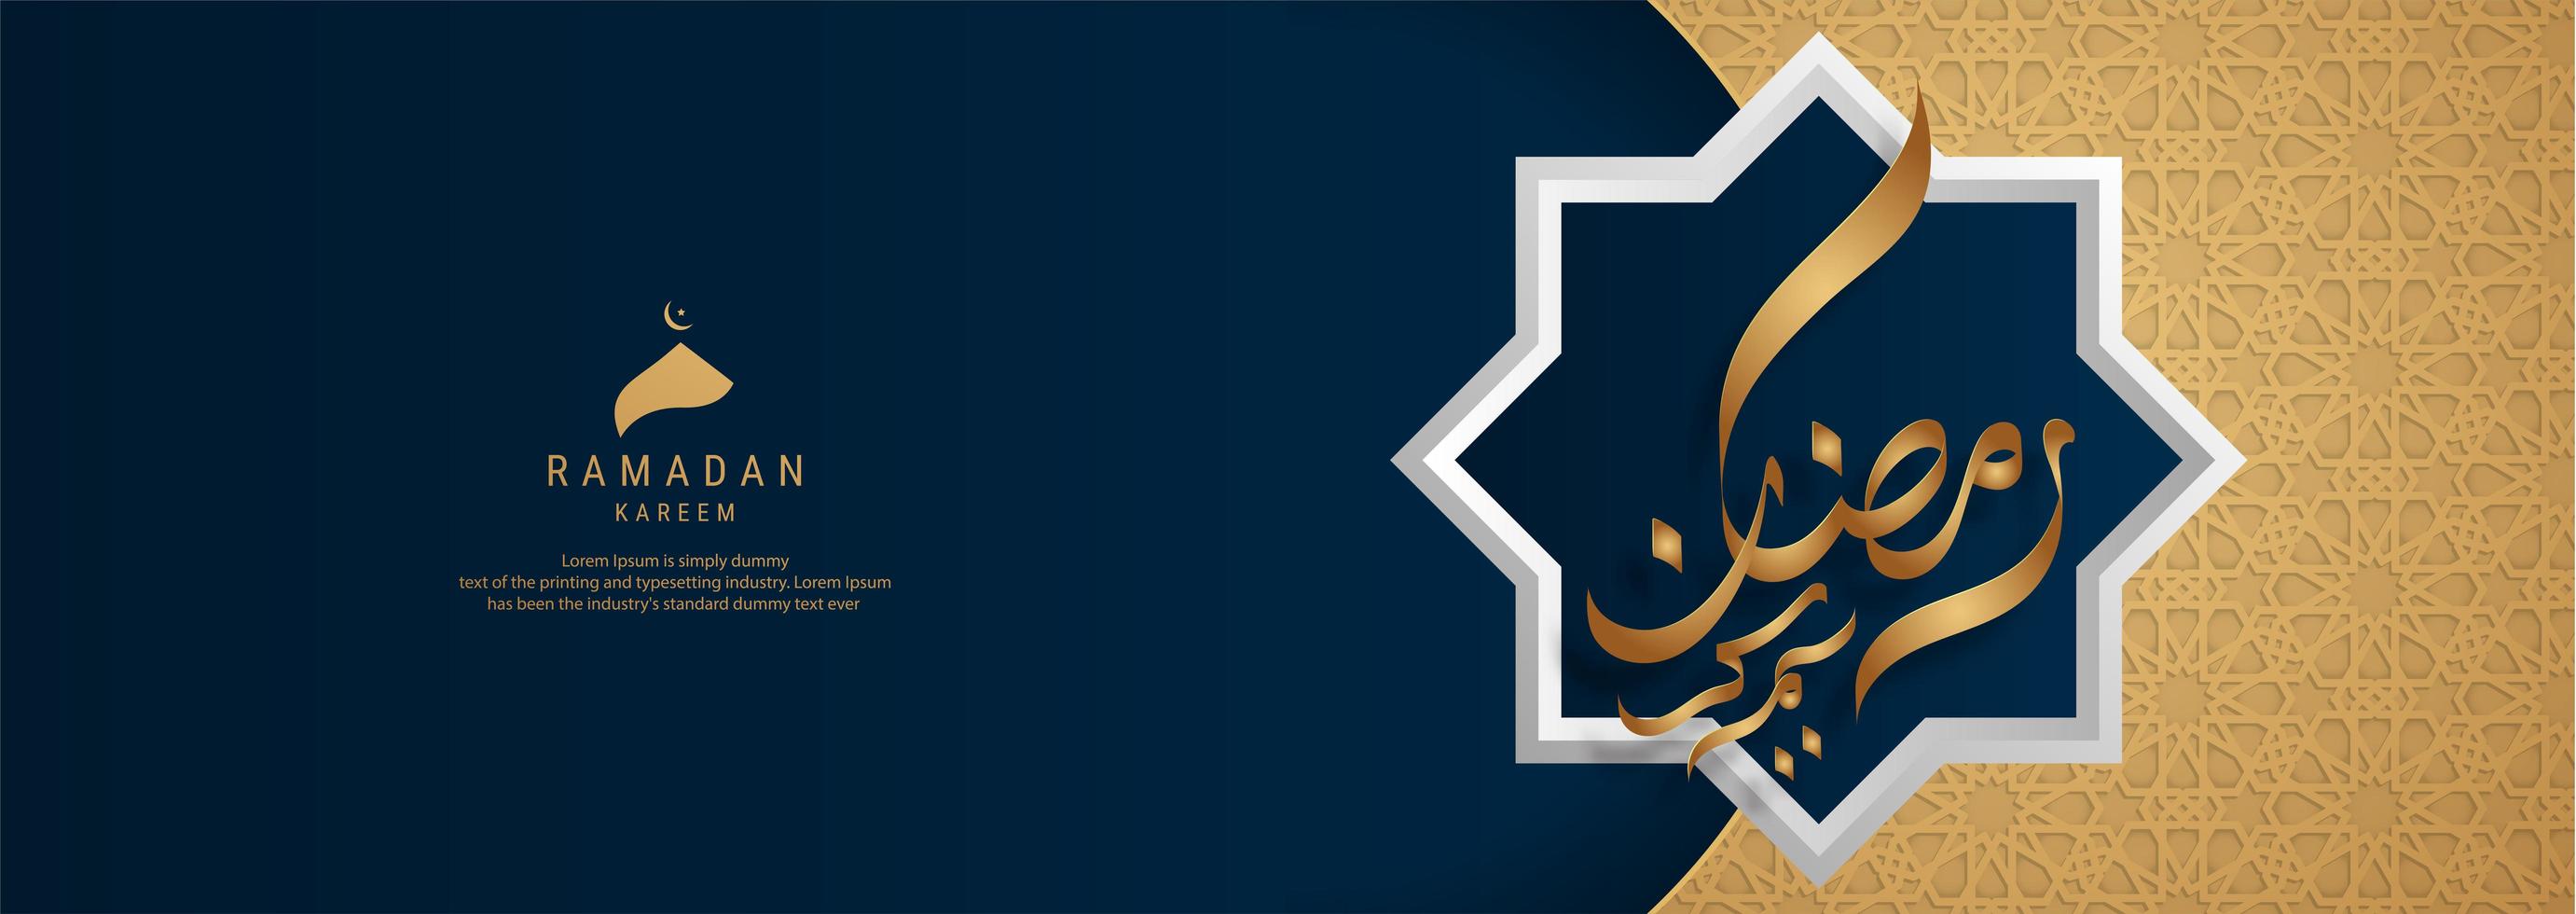 banner dourado e preto de caligrafia ramadan kareem vetor